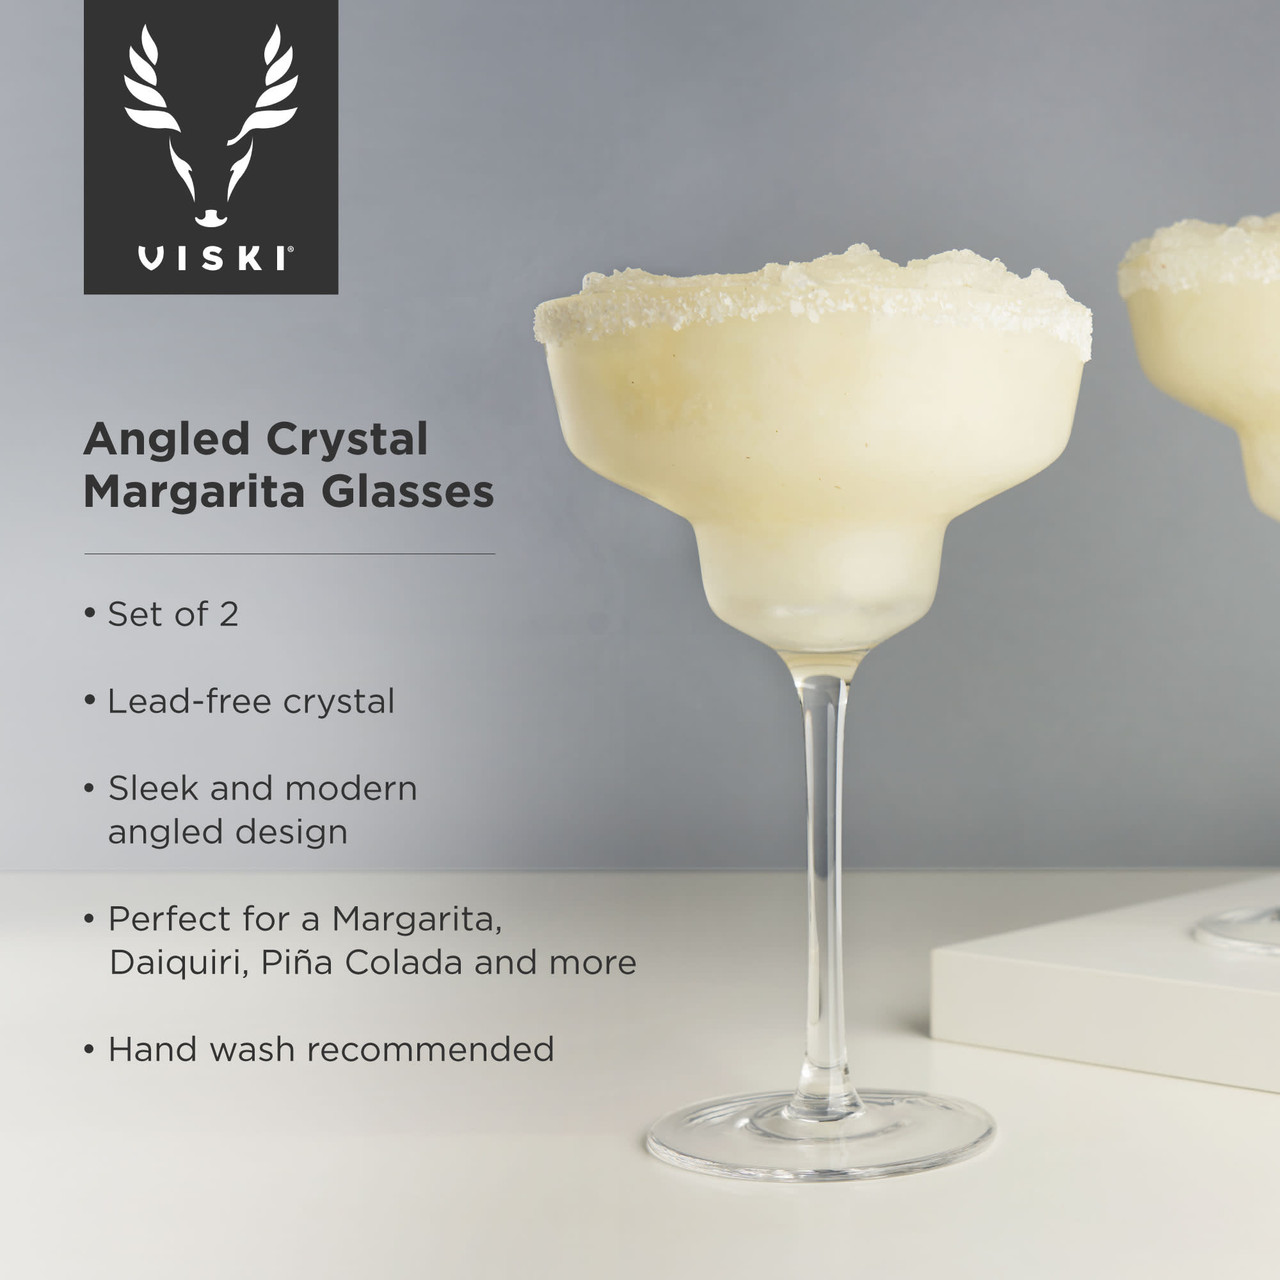 Angled Crystal Margarita Glasses by Viski®